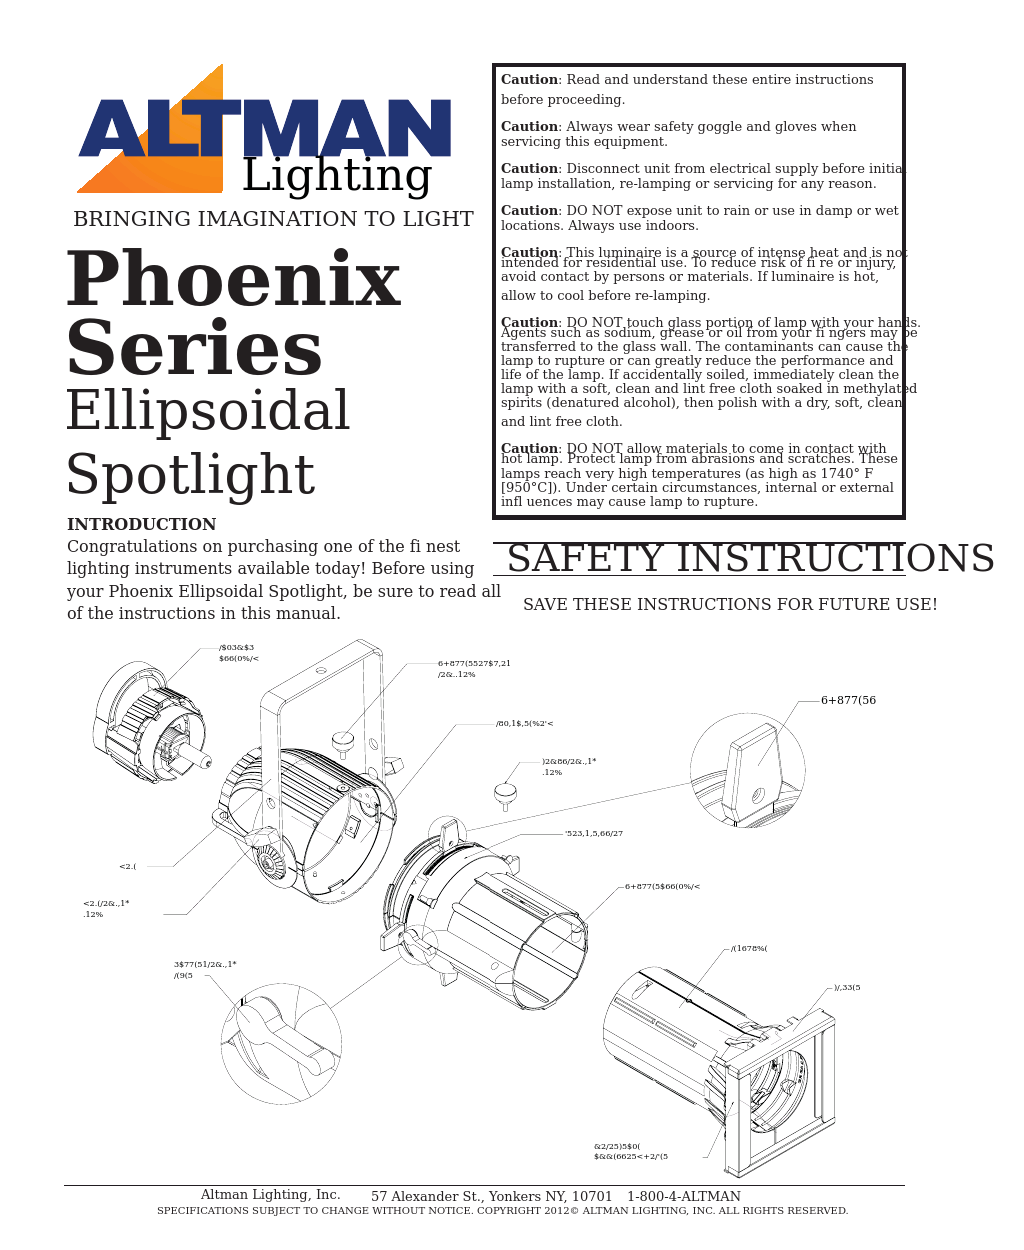 Phoenix Series Ellipsoidal Spotlight